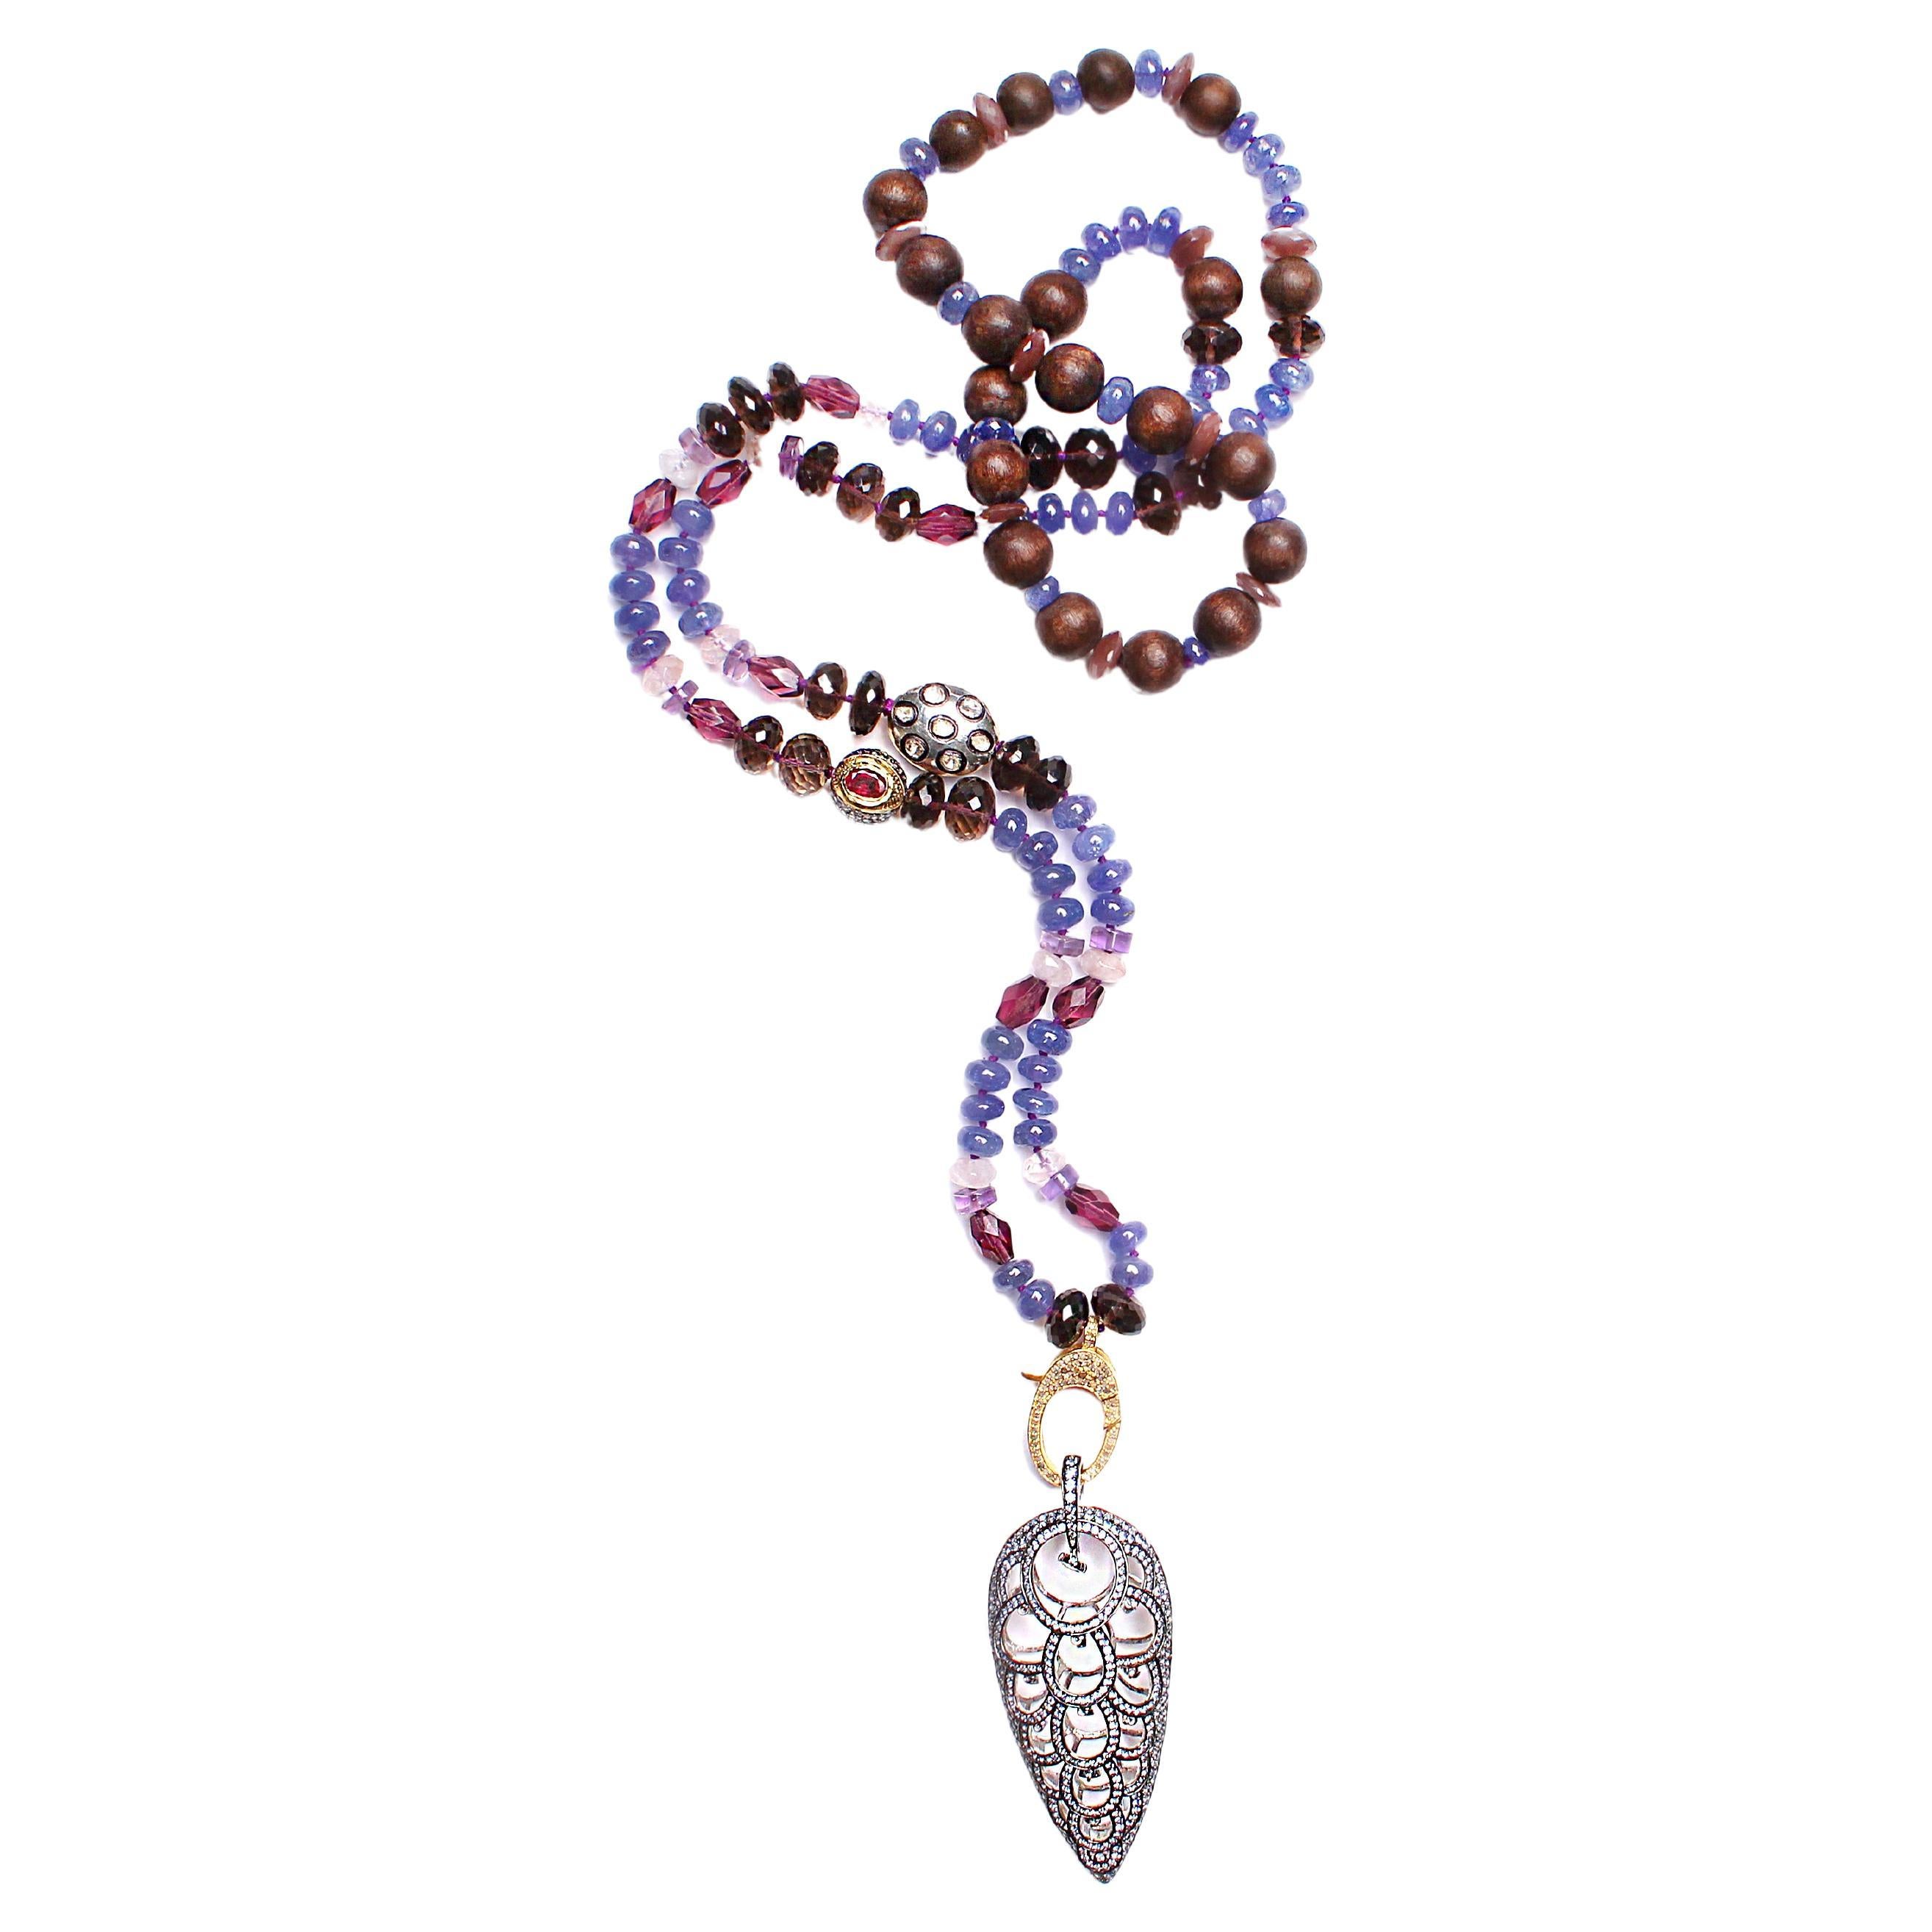 CLARISSA BRONFMAN Tazanite Diamond Sapphire Ruby Wood Feather Beaded Necklace 